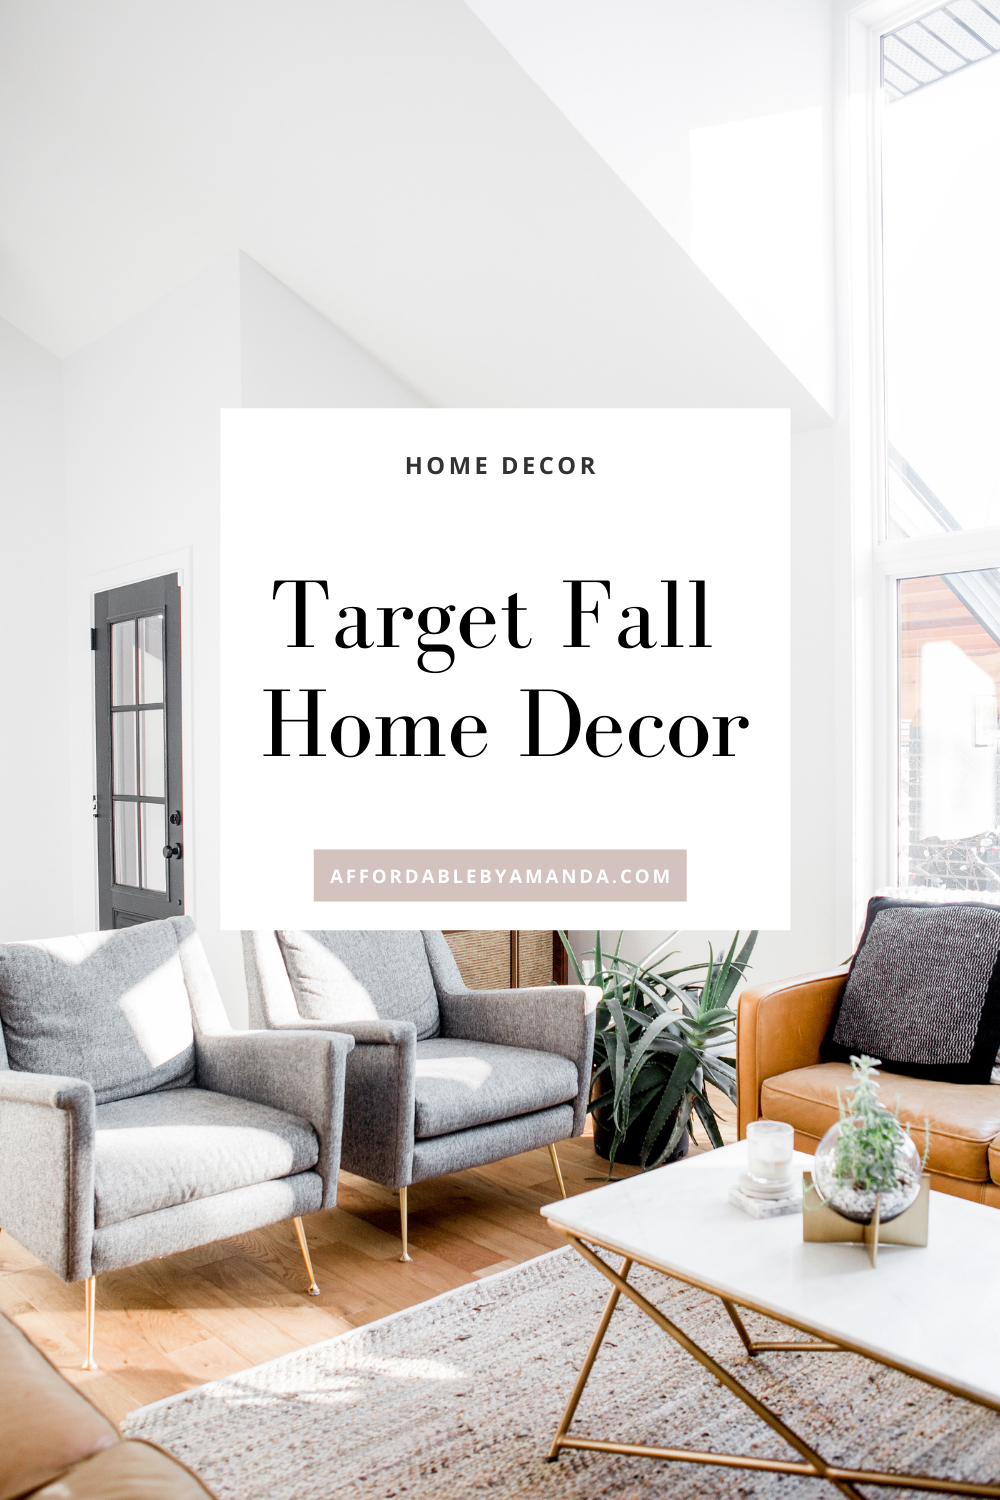 Target Fall Home Decor 2021